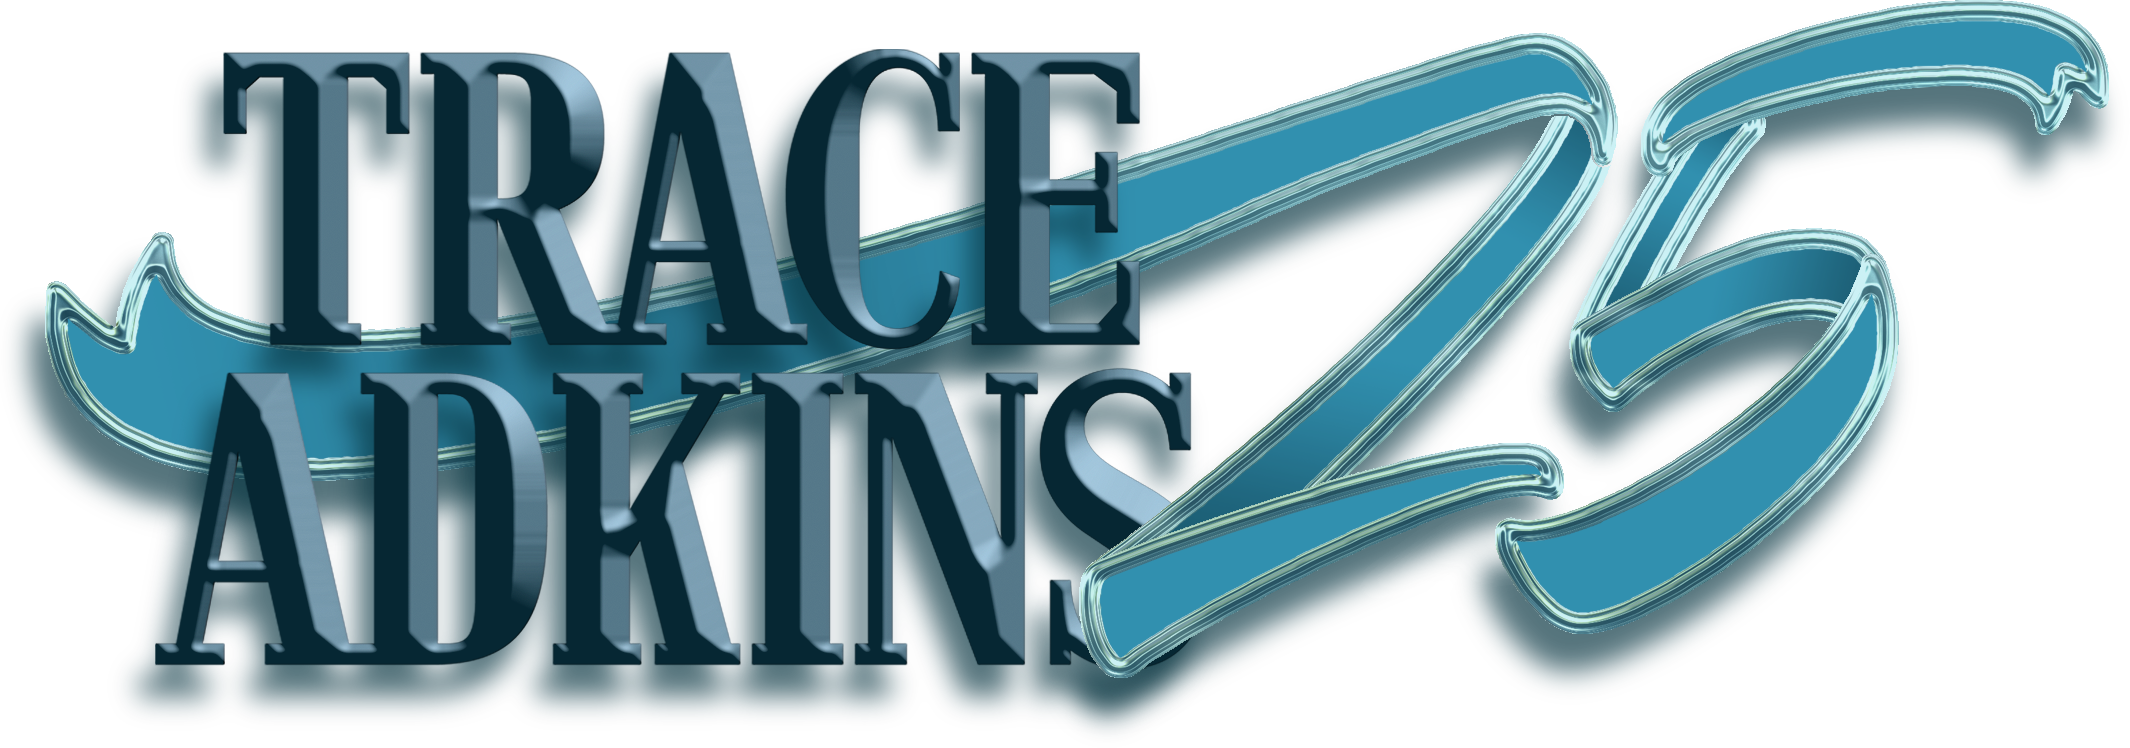 Trace Adkins logo